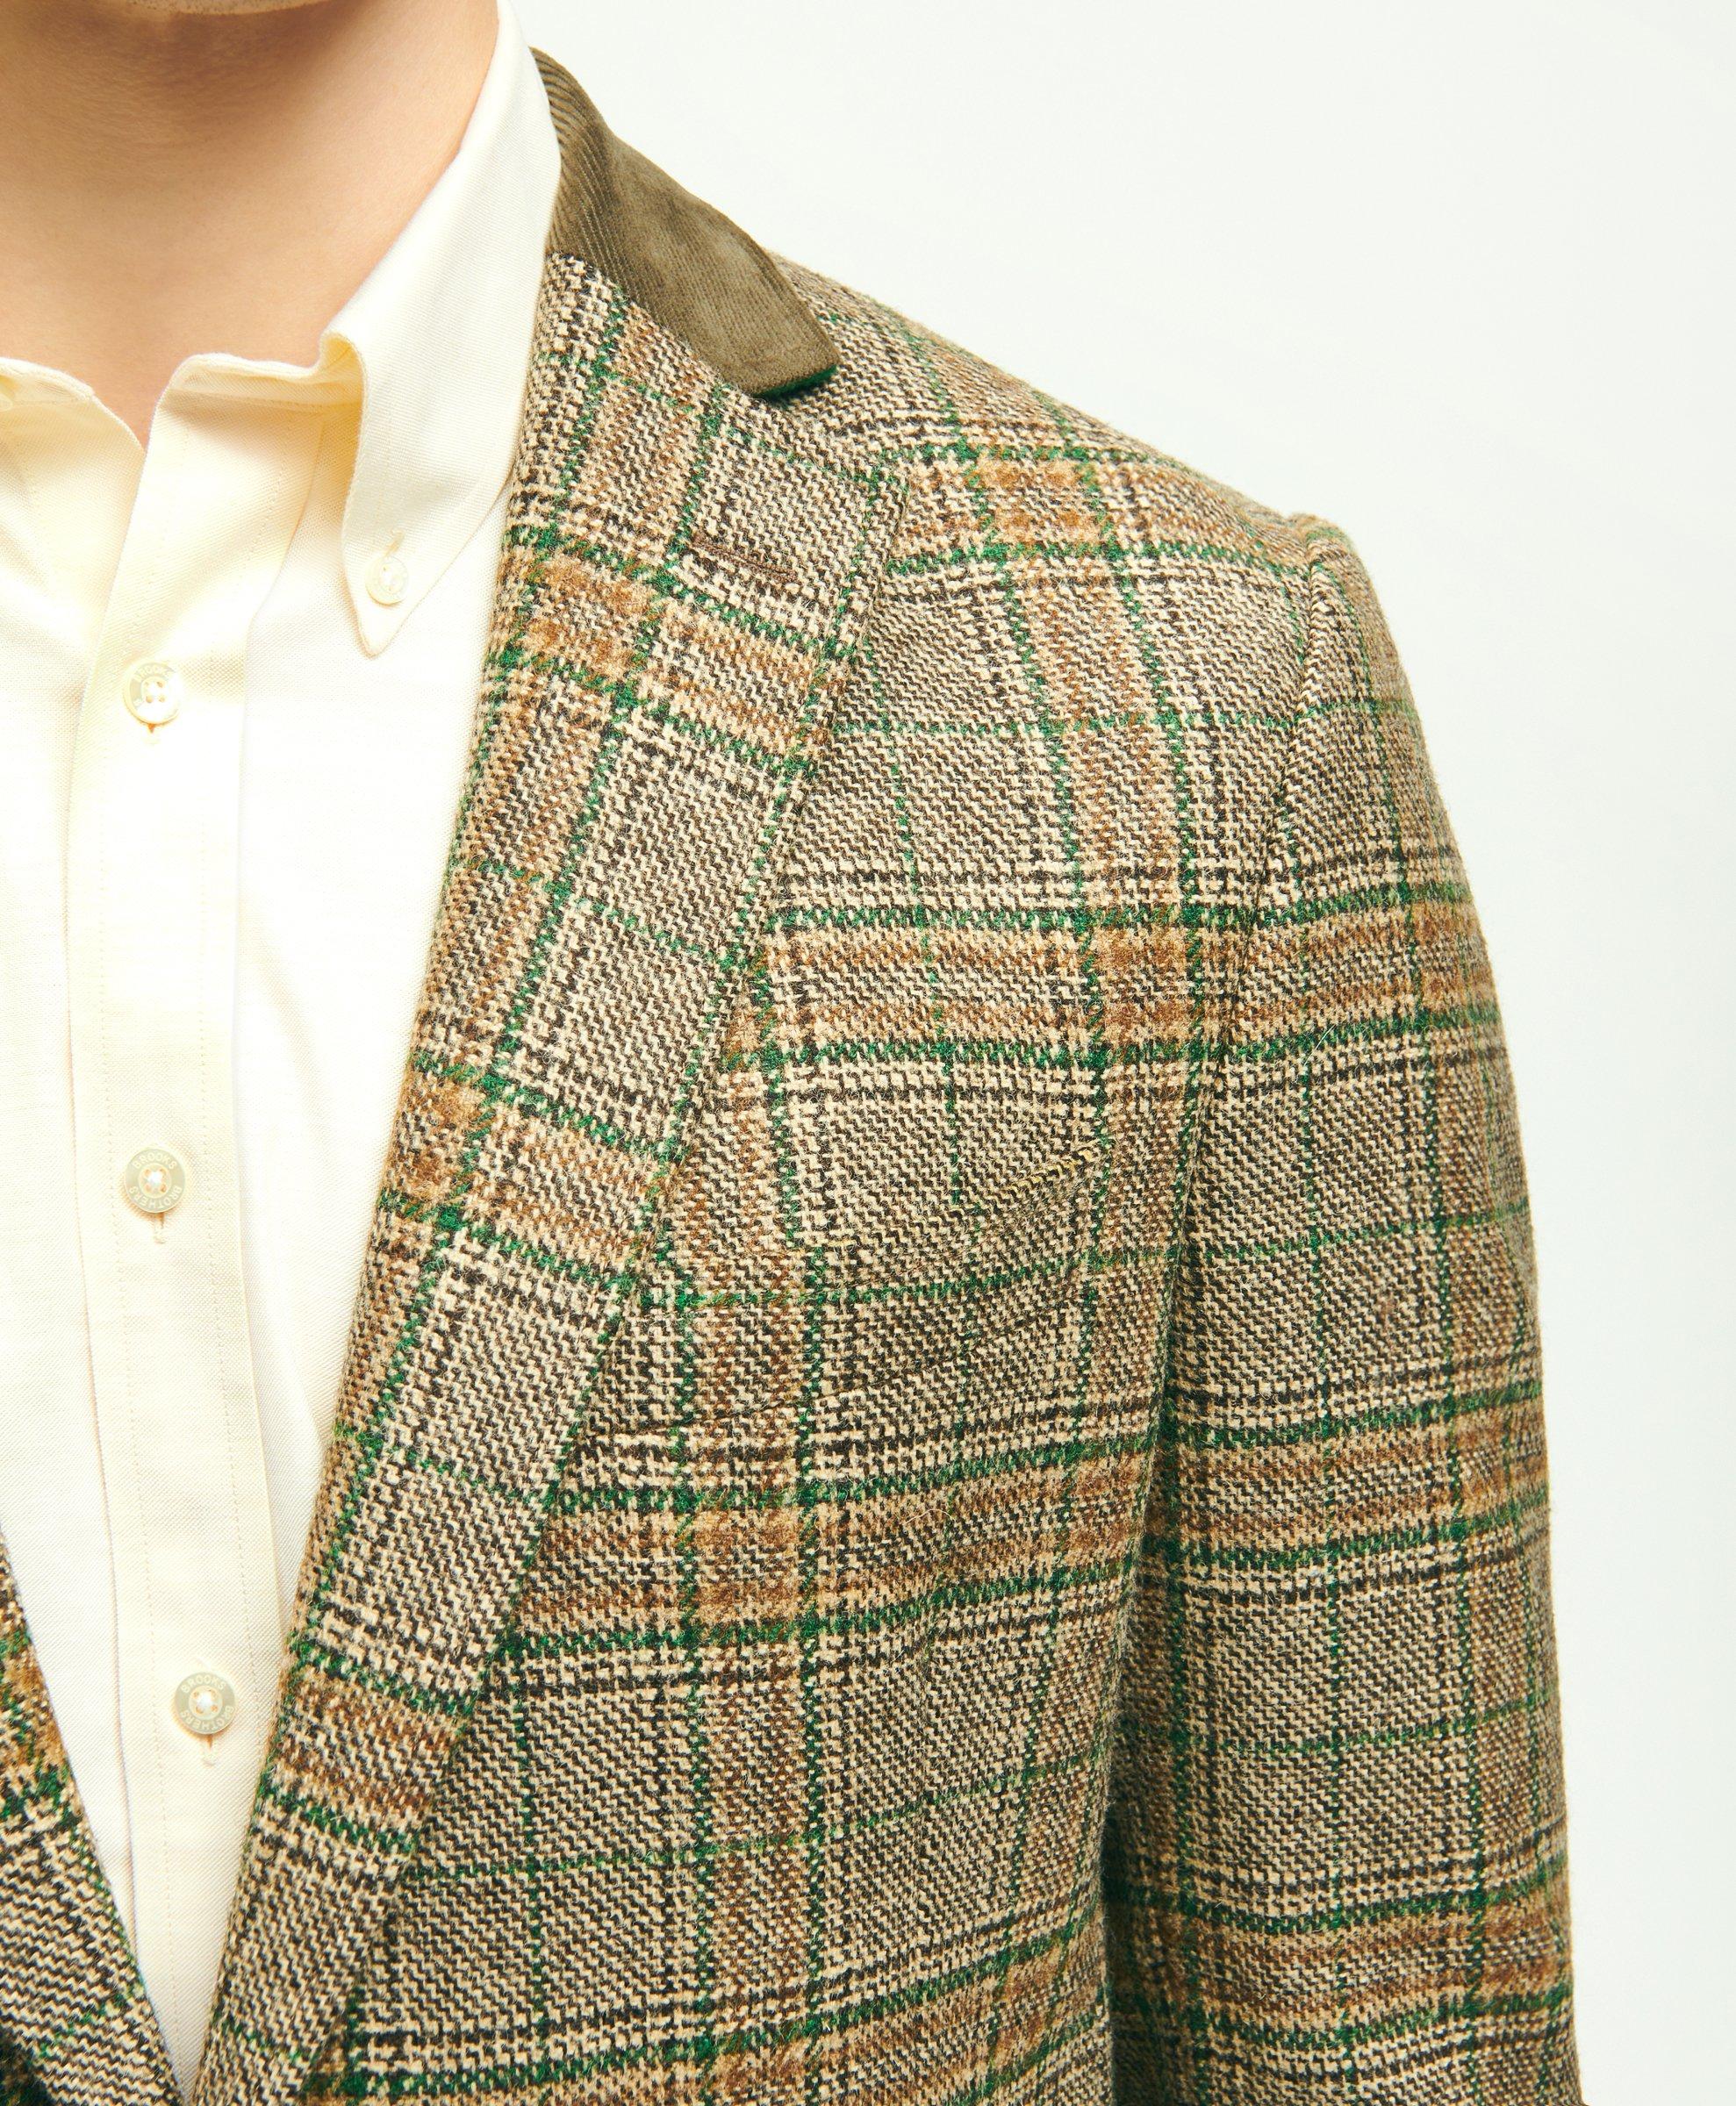 Brooks Brothers Men's Classic Fit Wool Plaid 1818 Sport Coat | Brown | Size 42 Regular